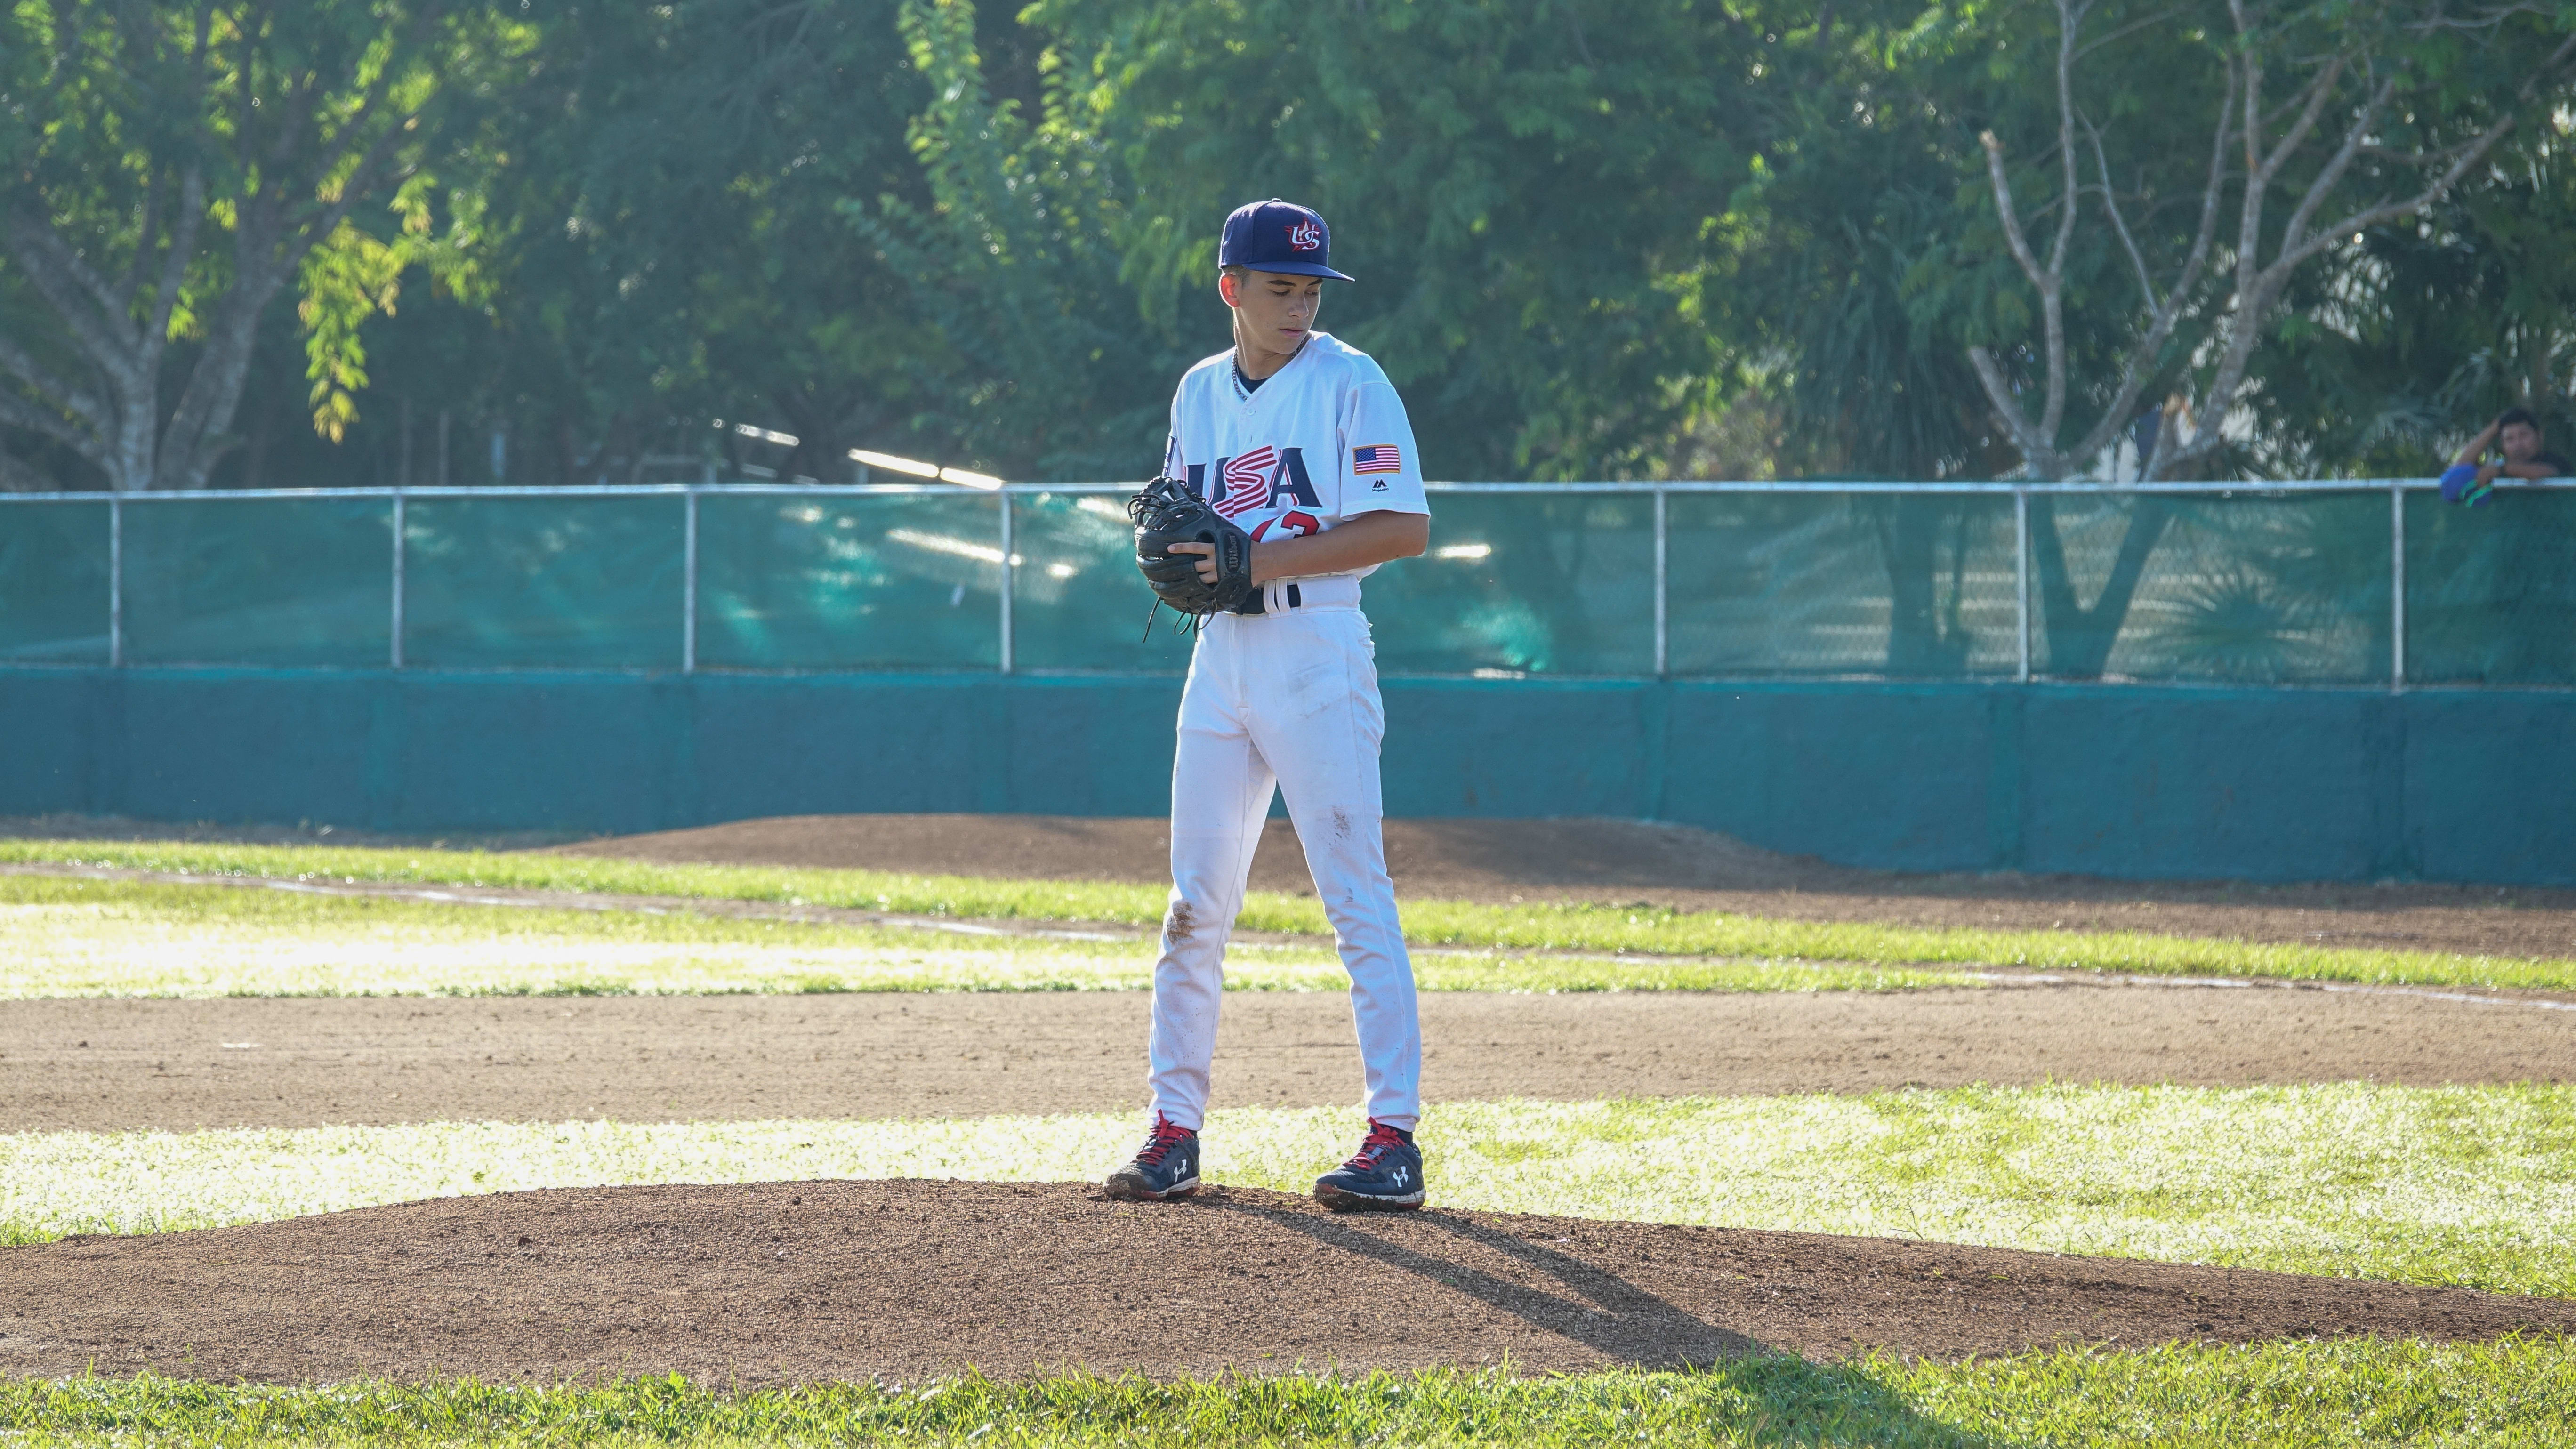 Rawlings Baseball on X: Nolan Arenado always brings the heat with